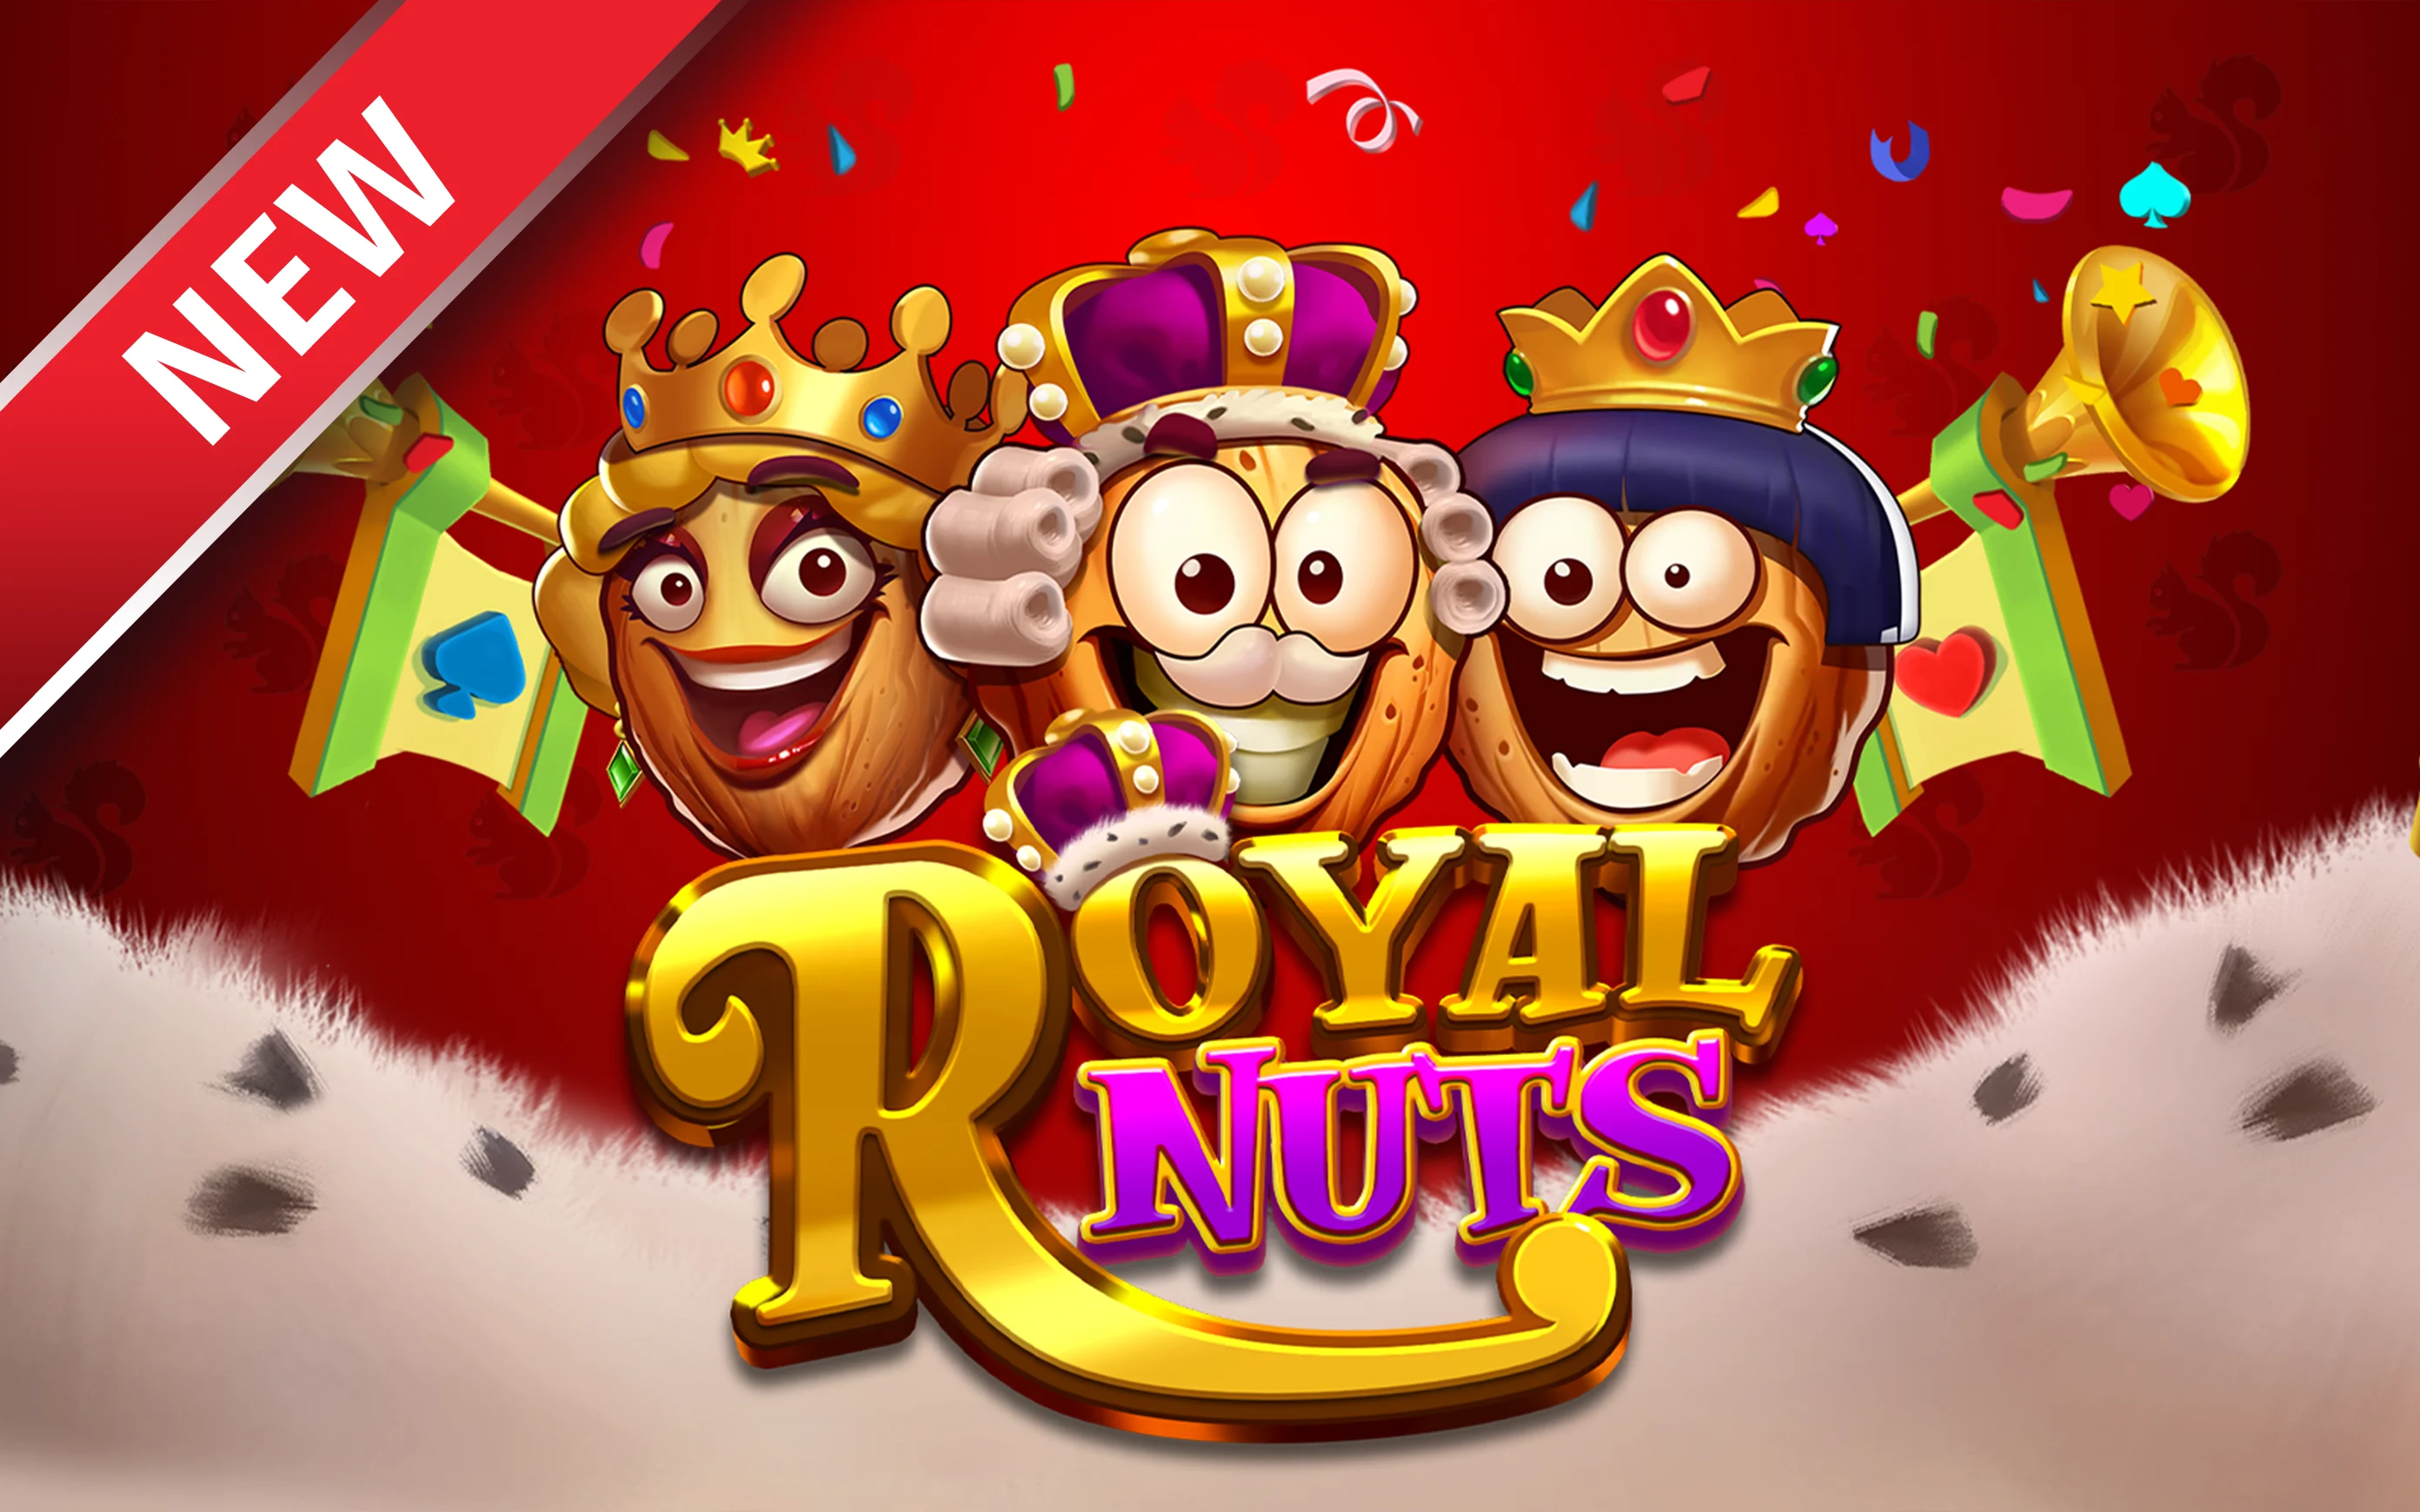 Joacă Royal Nuts în cazinoul online Starcasino.be